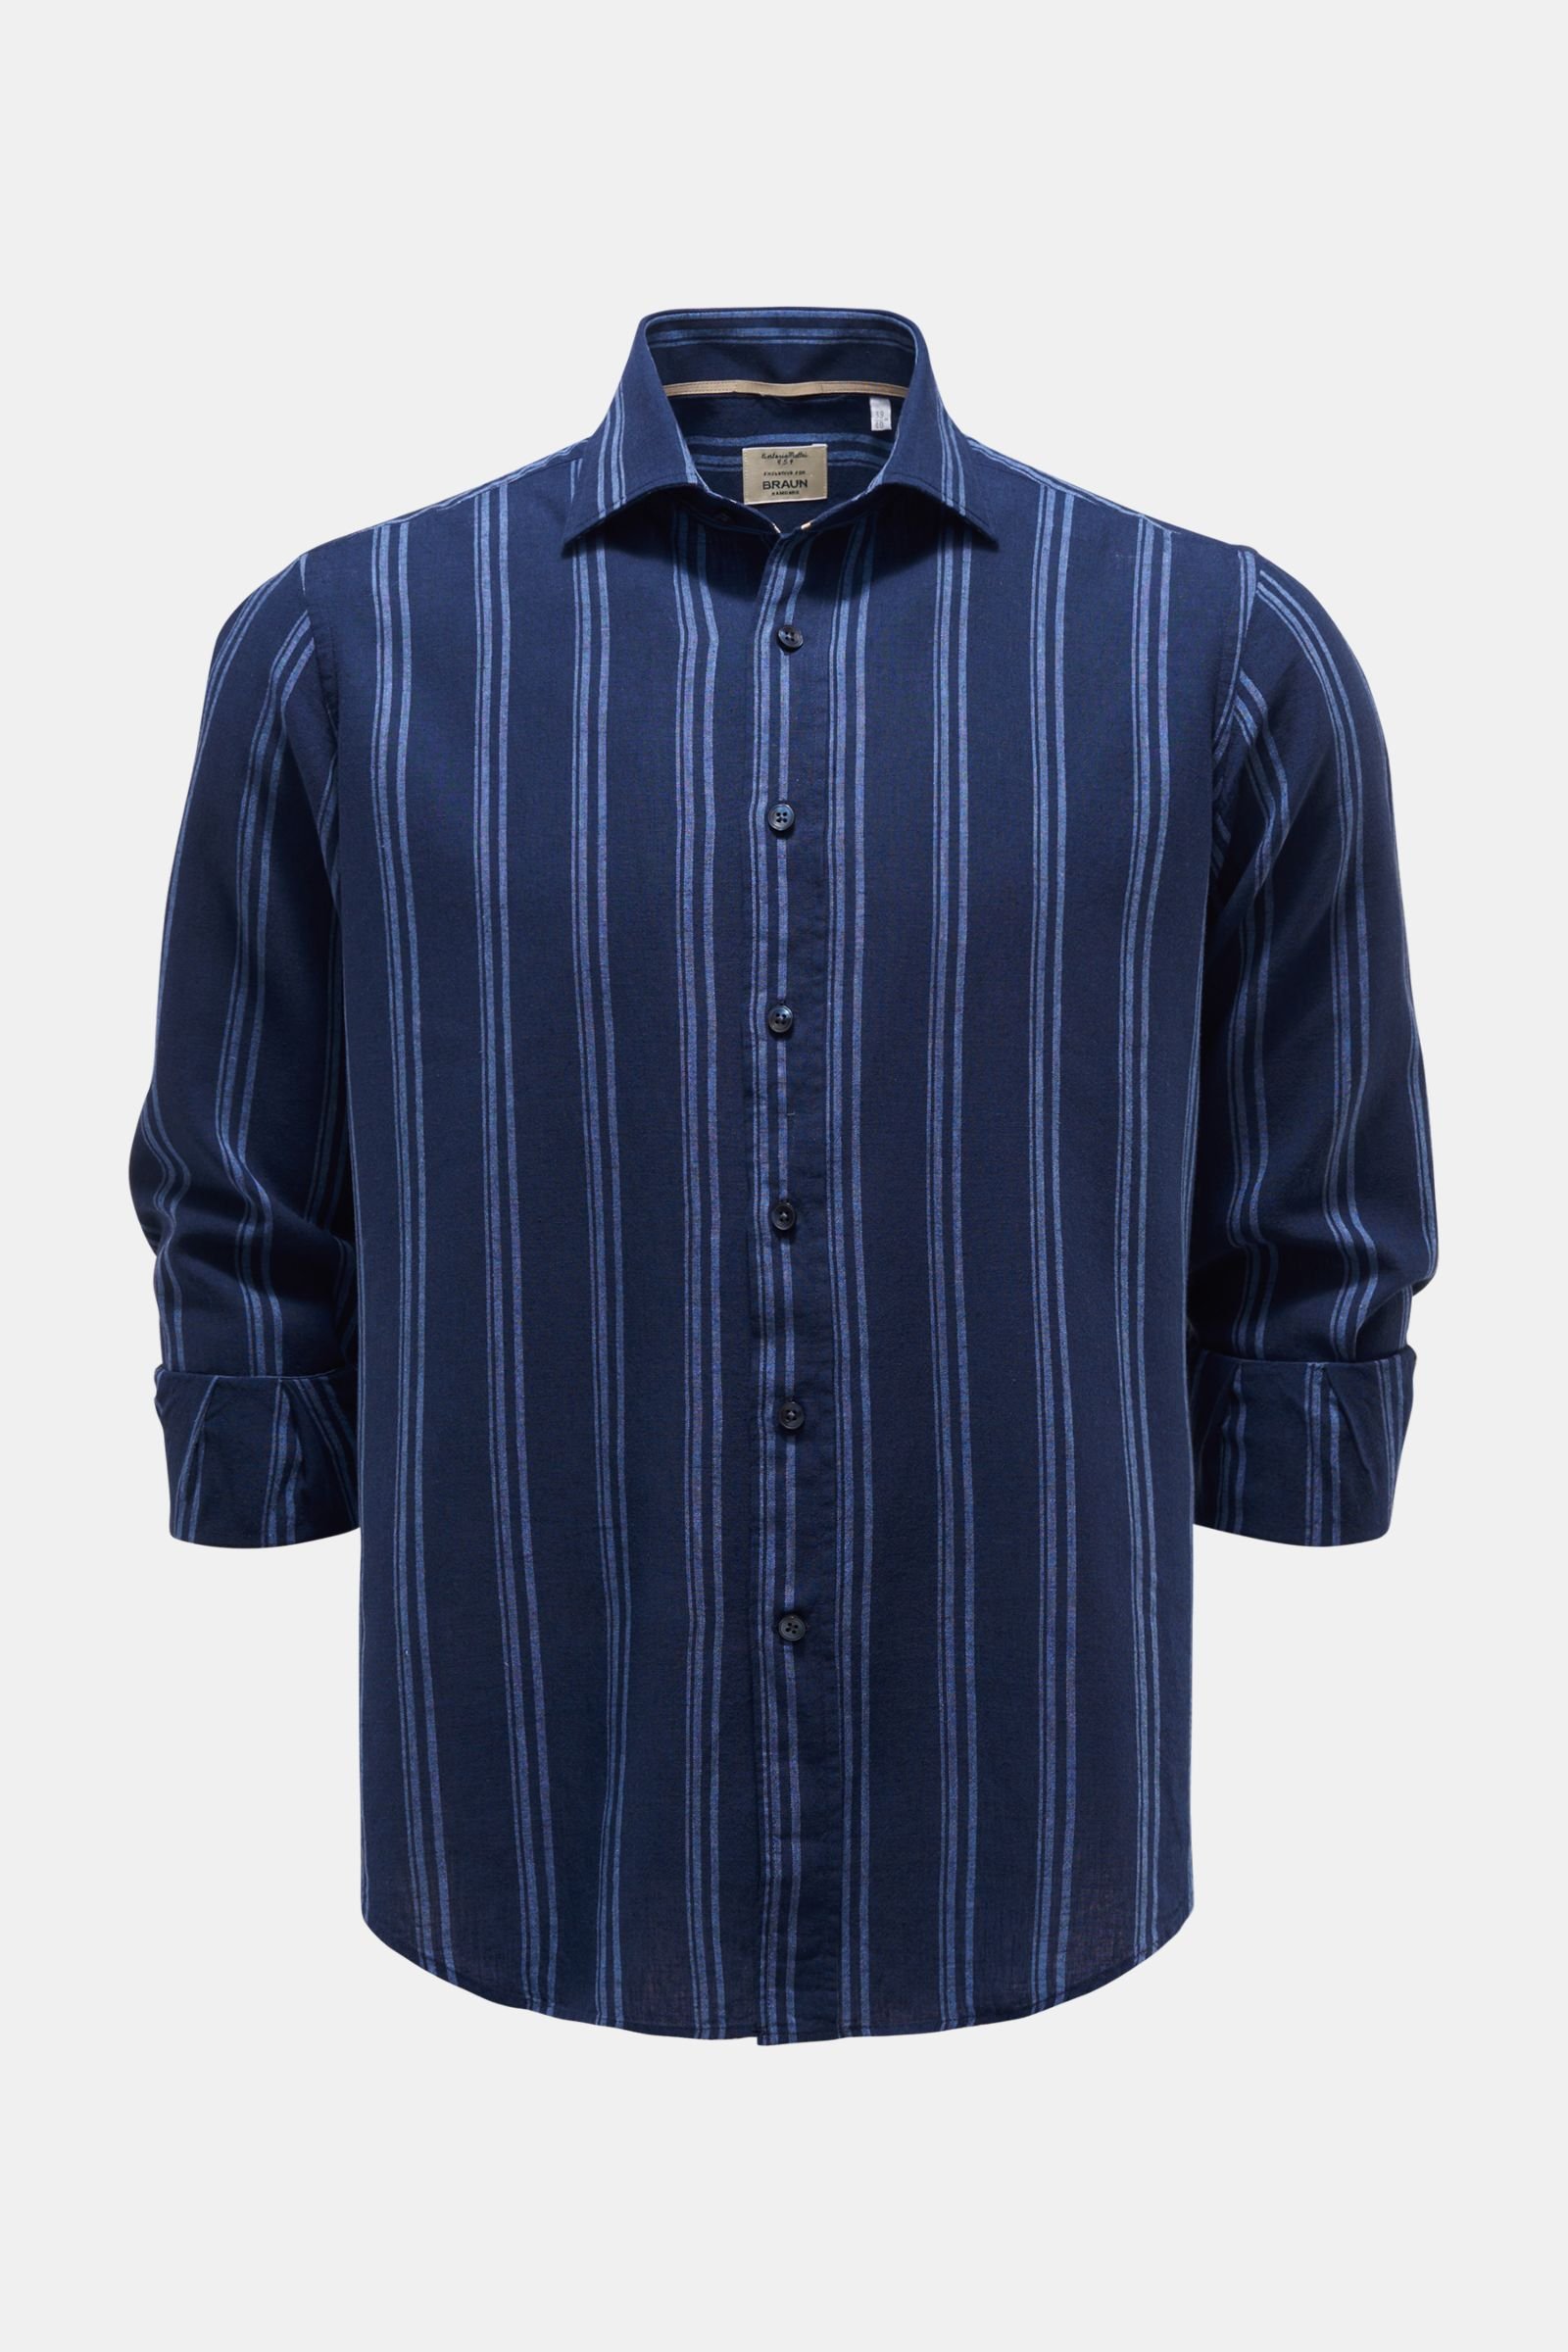 Casual shirt shark collar navy/smoky blue striped